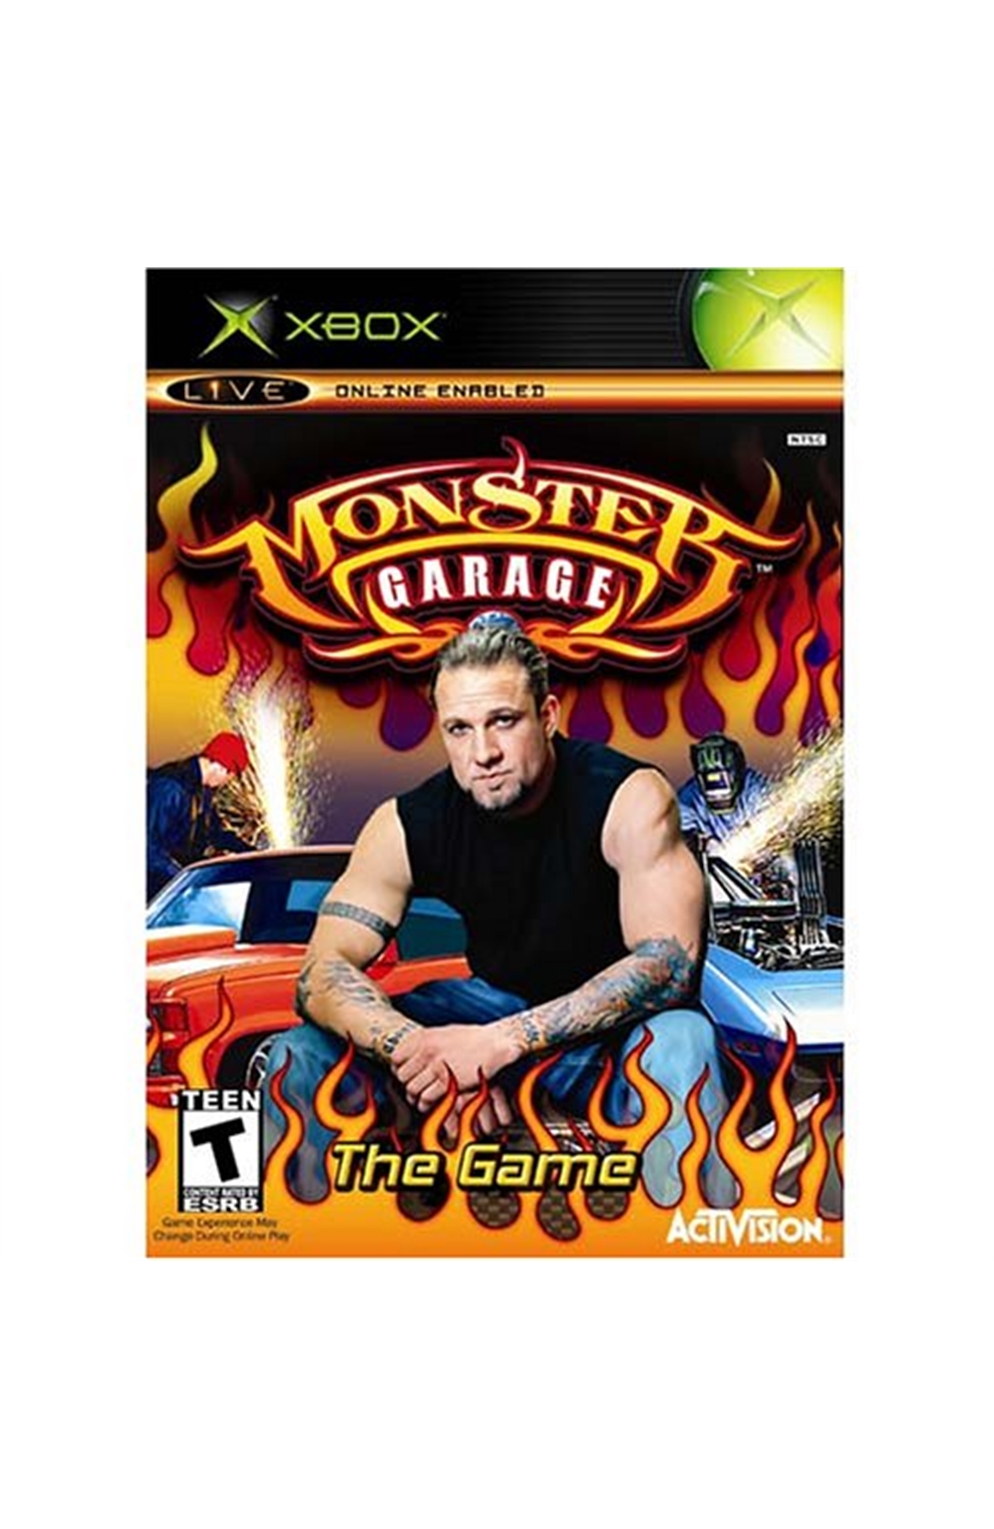 Xbox Xb Monster Garage